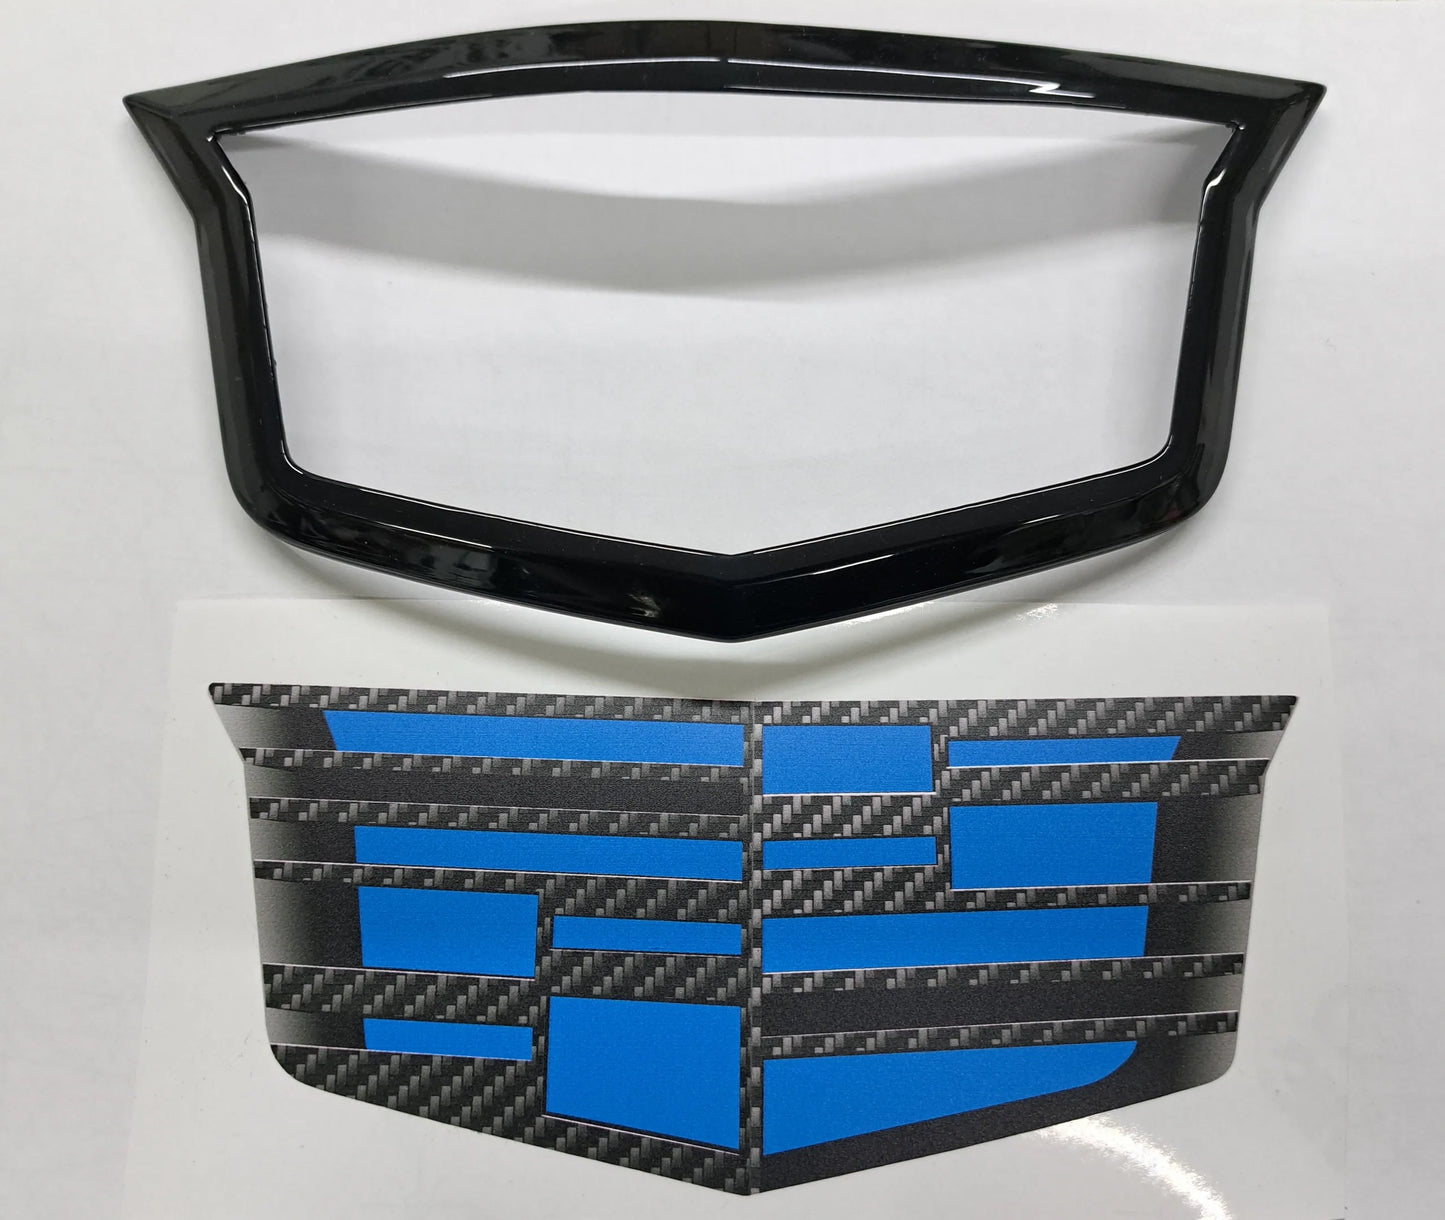 Cadillac CT5-V Adaptive Cruise Emblem Electric Blue Kit in Gloss Black or Carbon Fiber Print